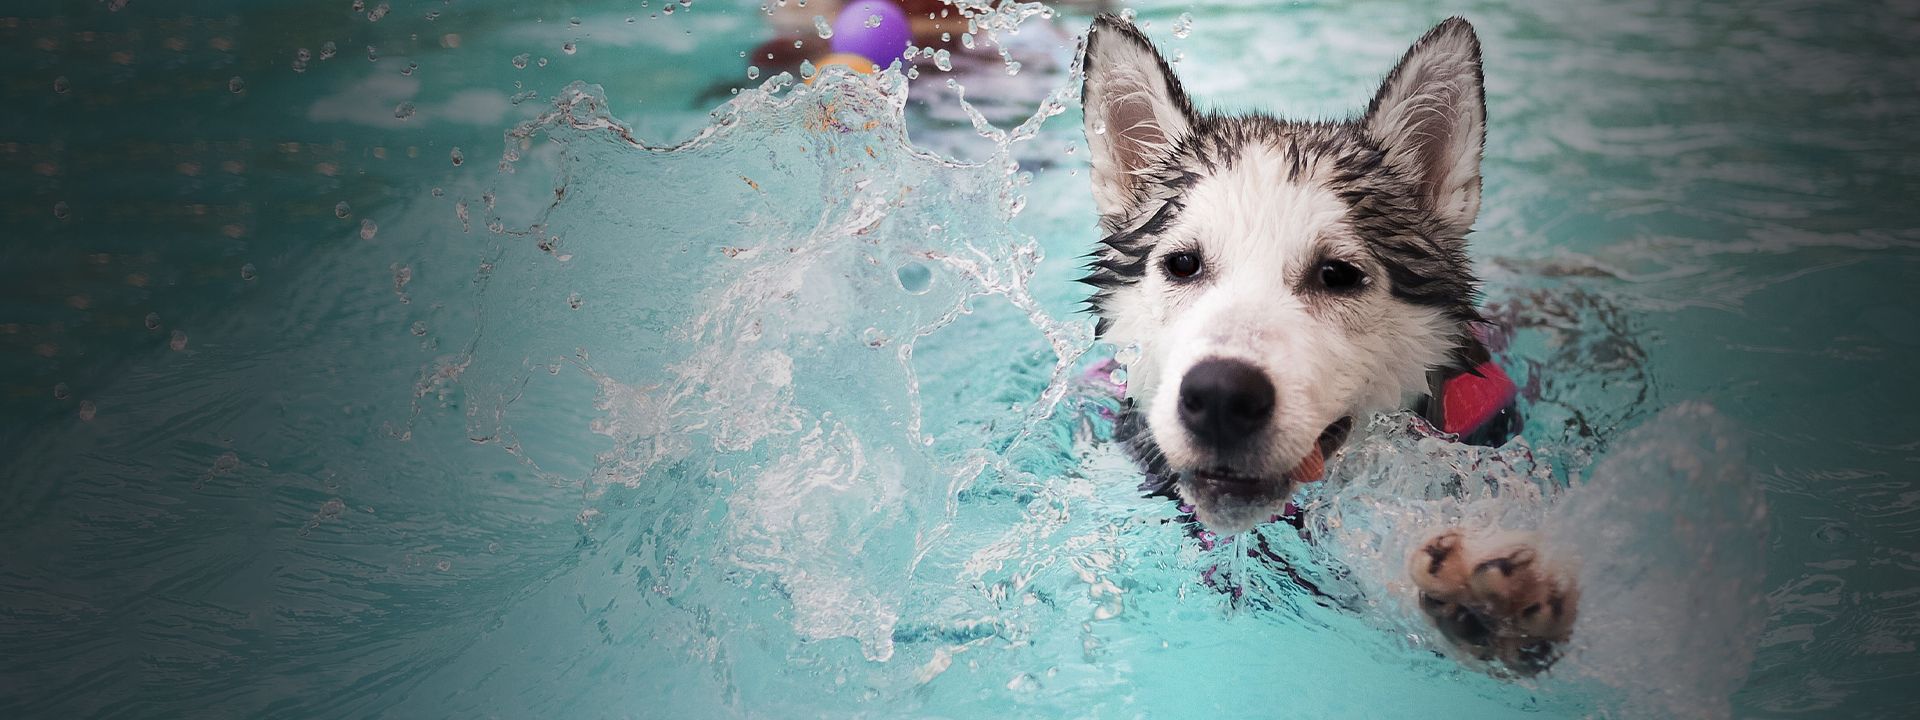 husky dog swimming in a pool